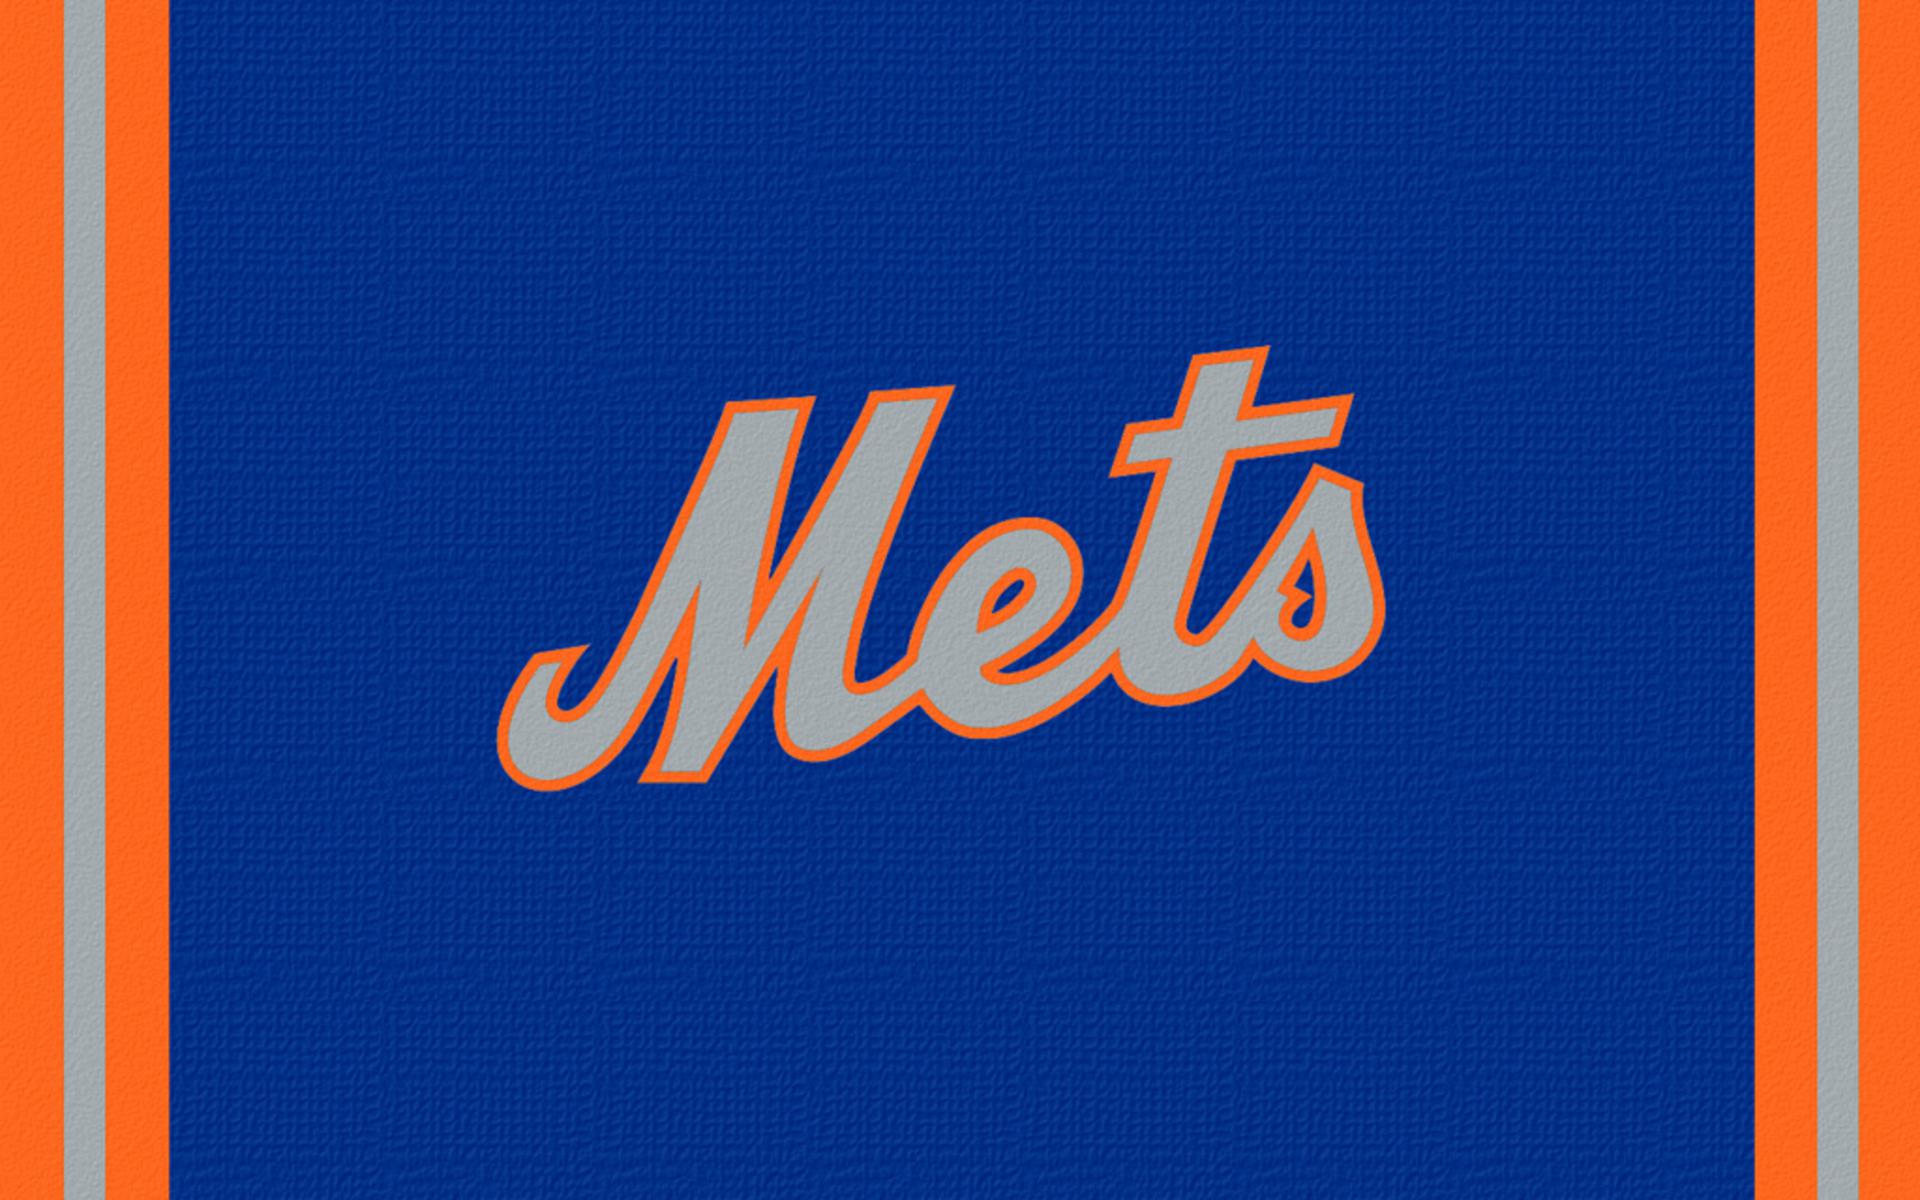 New York Mets Theme PS Vita Wallpaper Free PS Vita Themes and 640